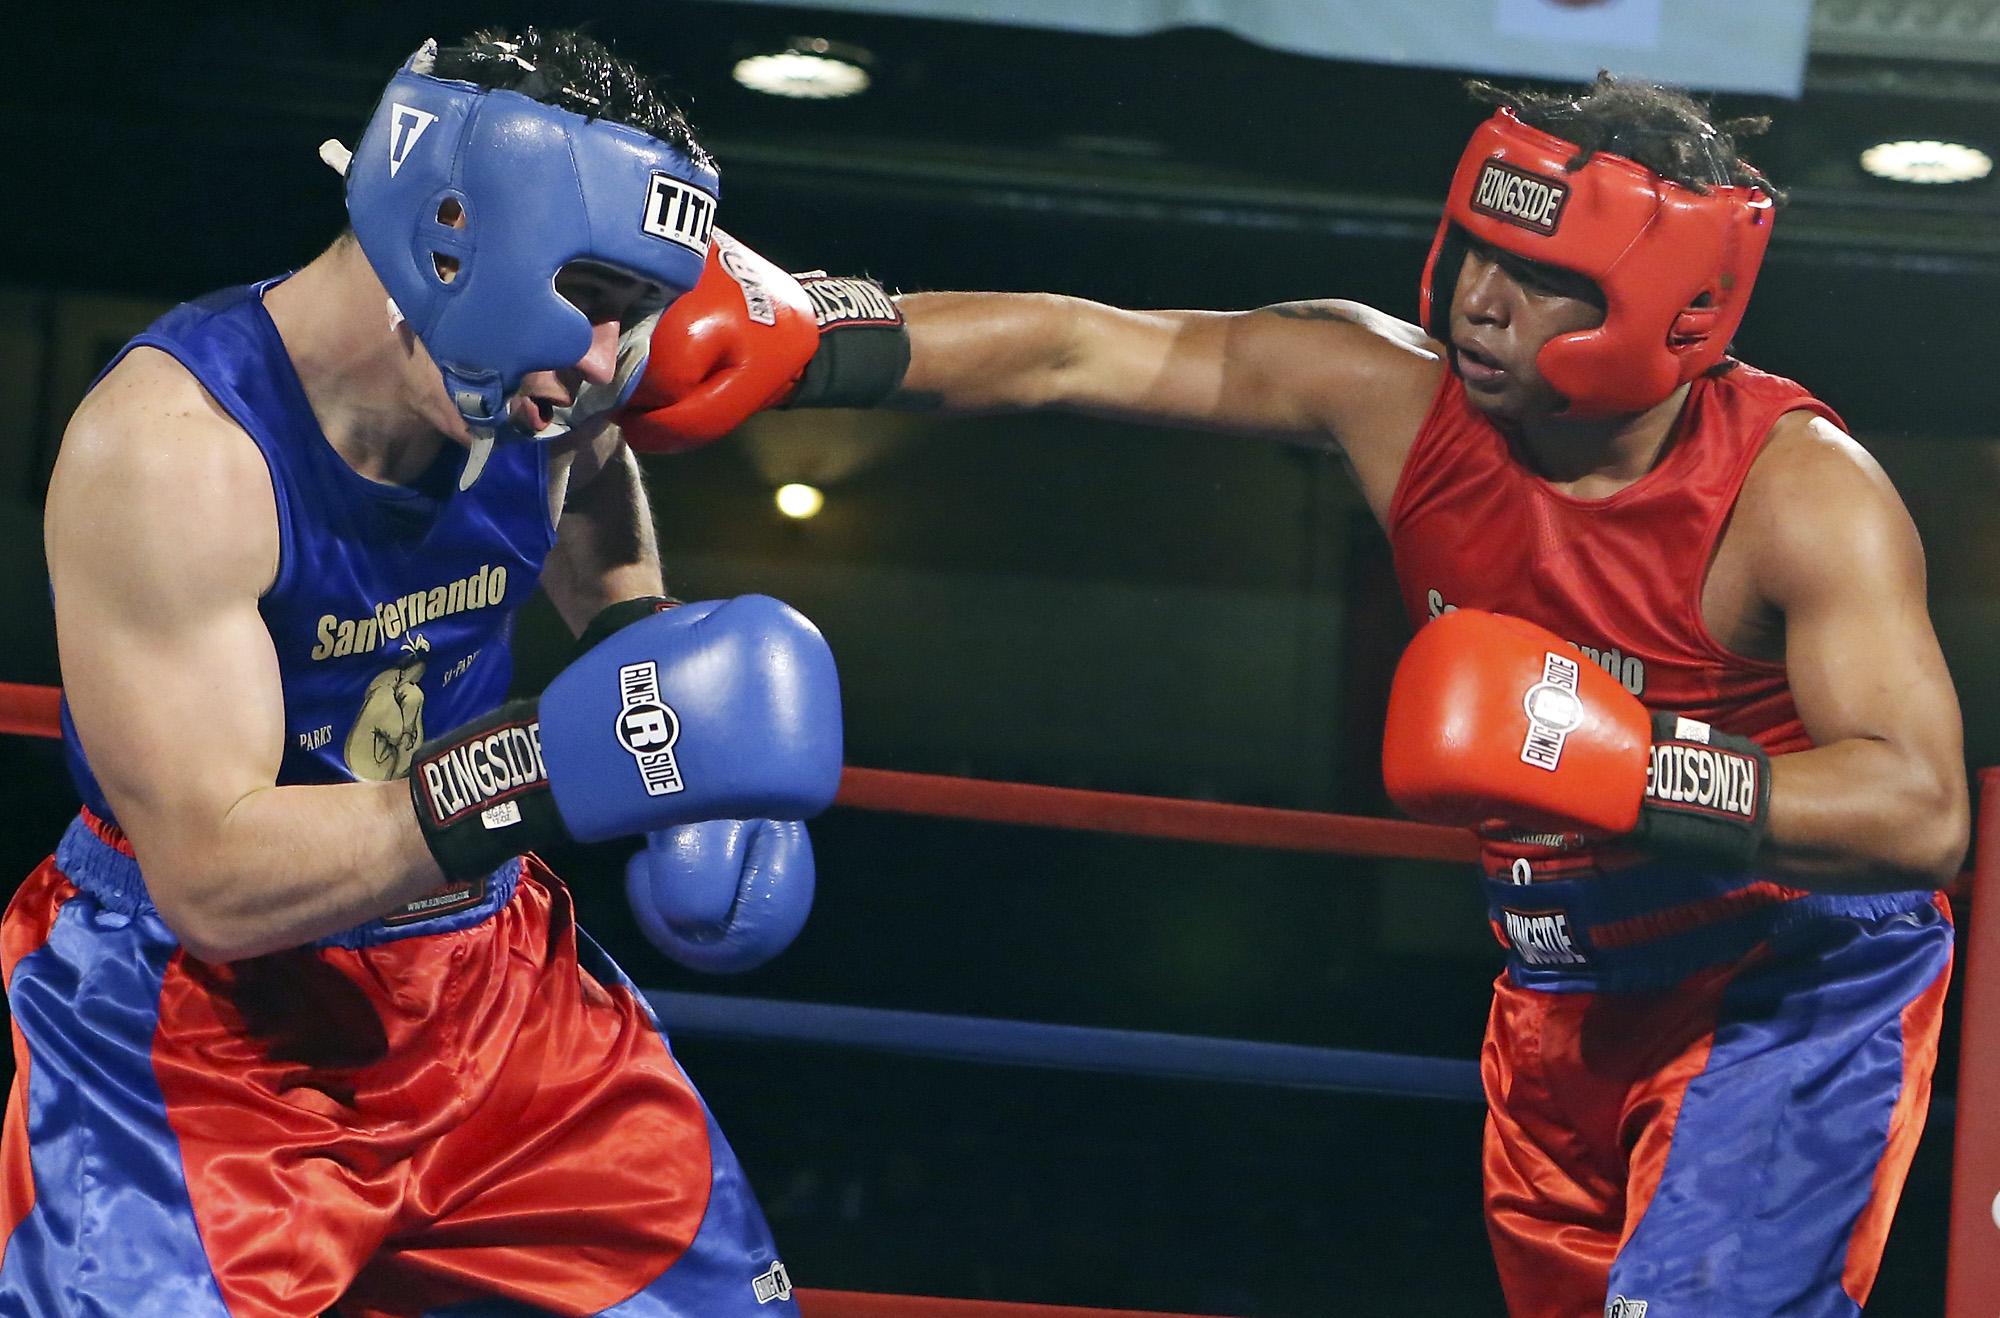 new york amateur golden gloves boxer